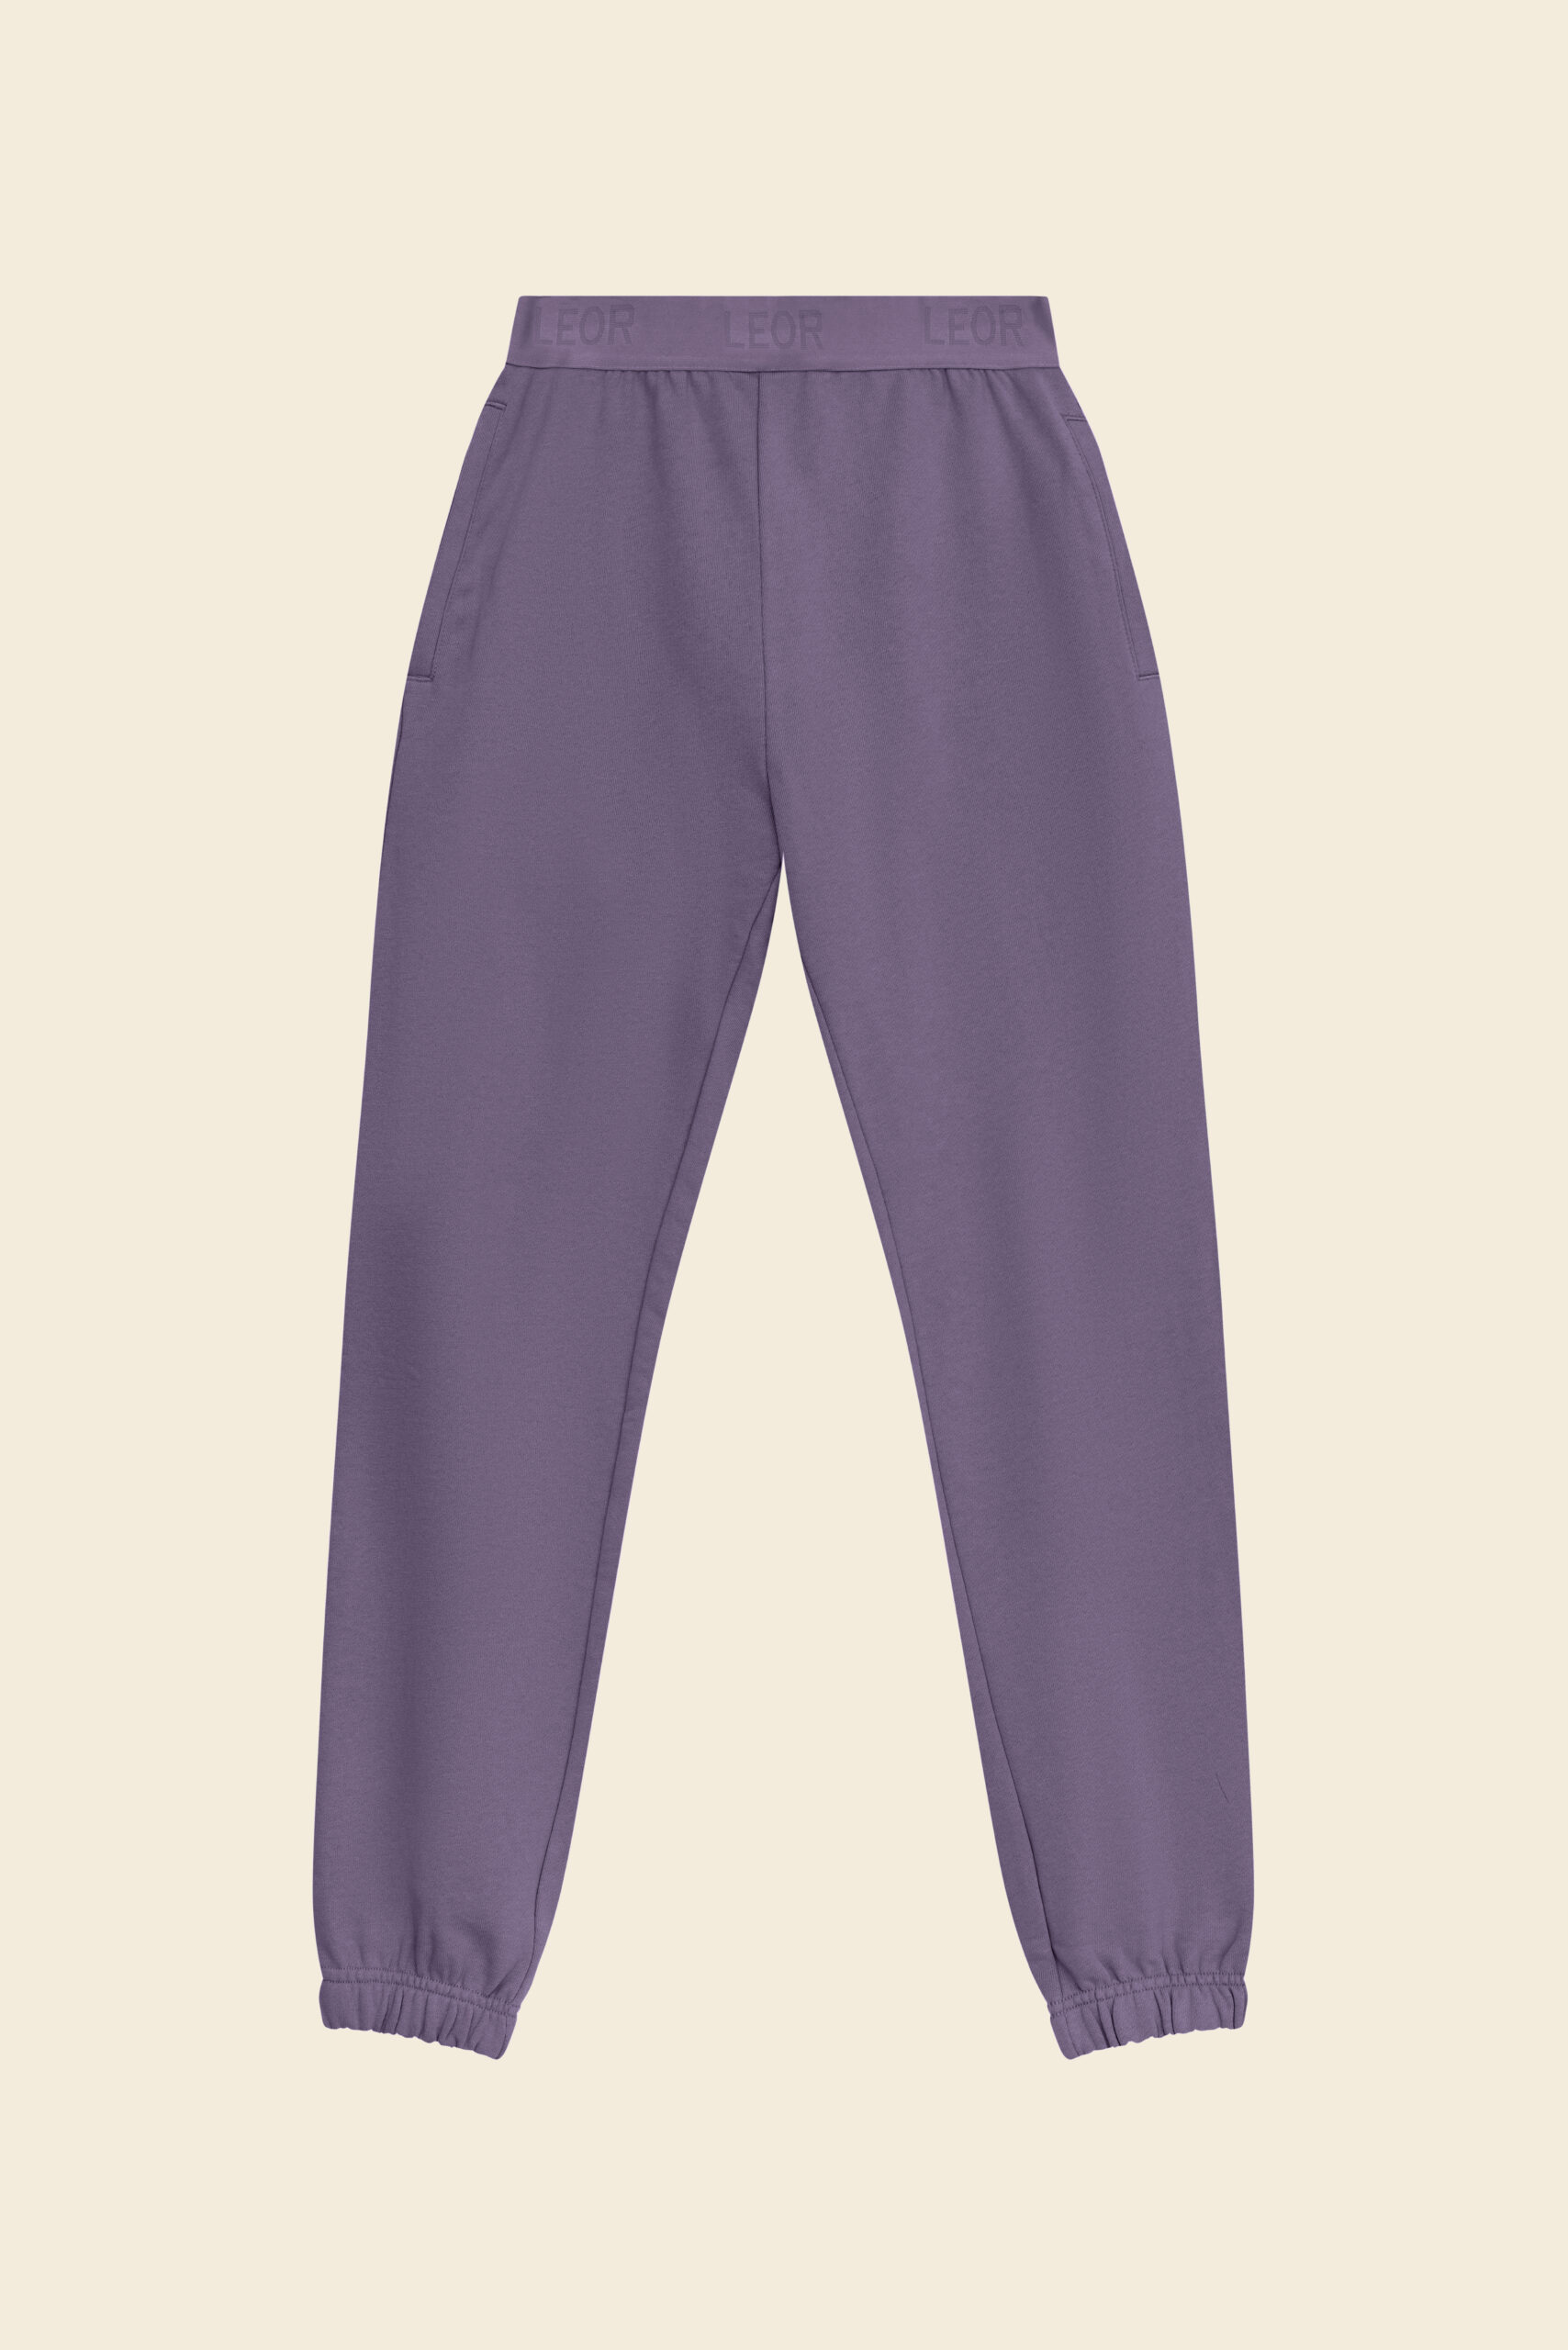 sweatpants purple